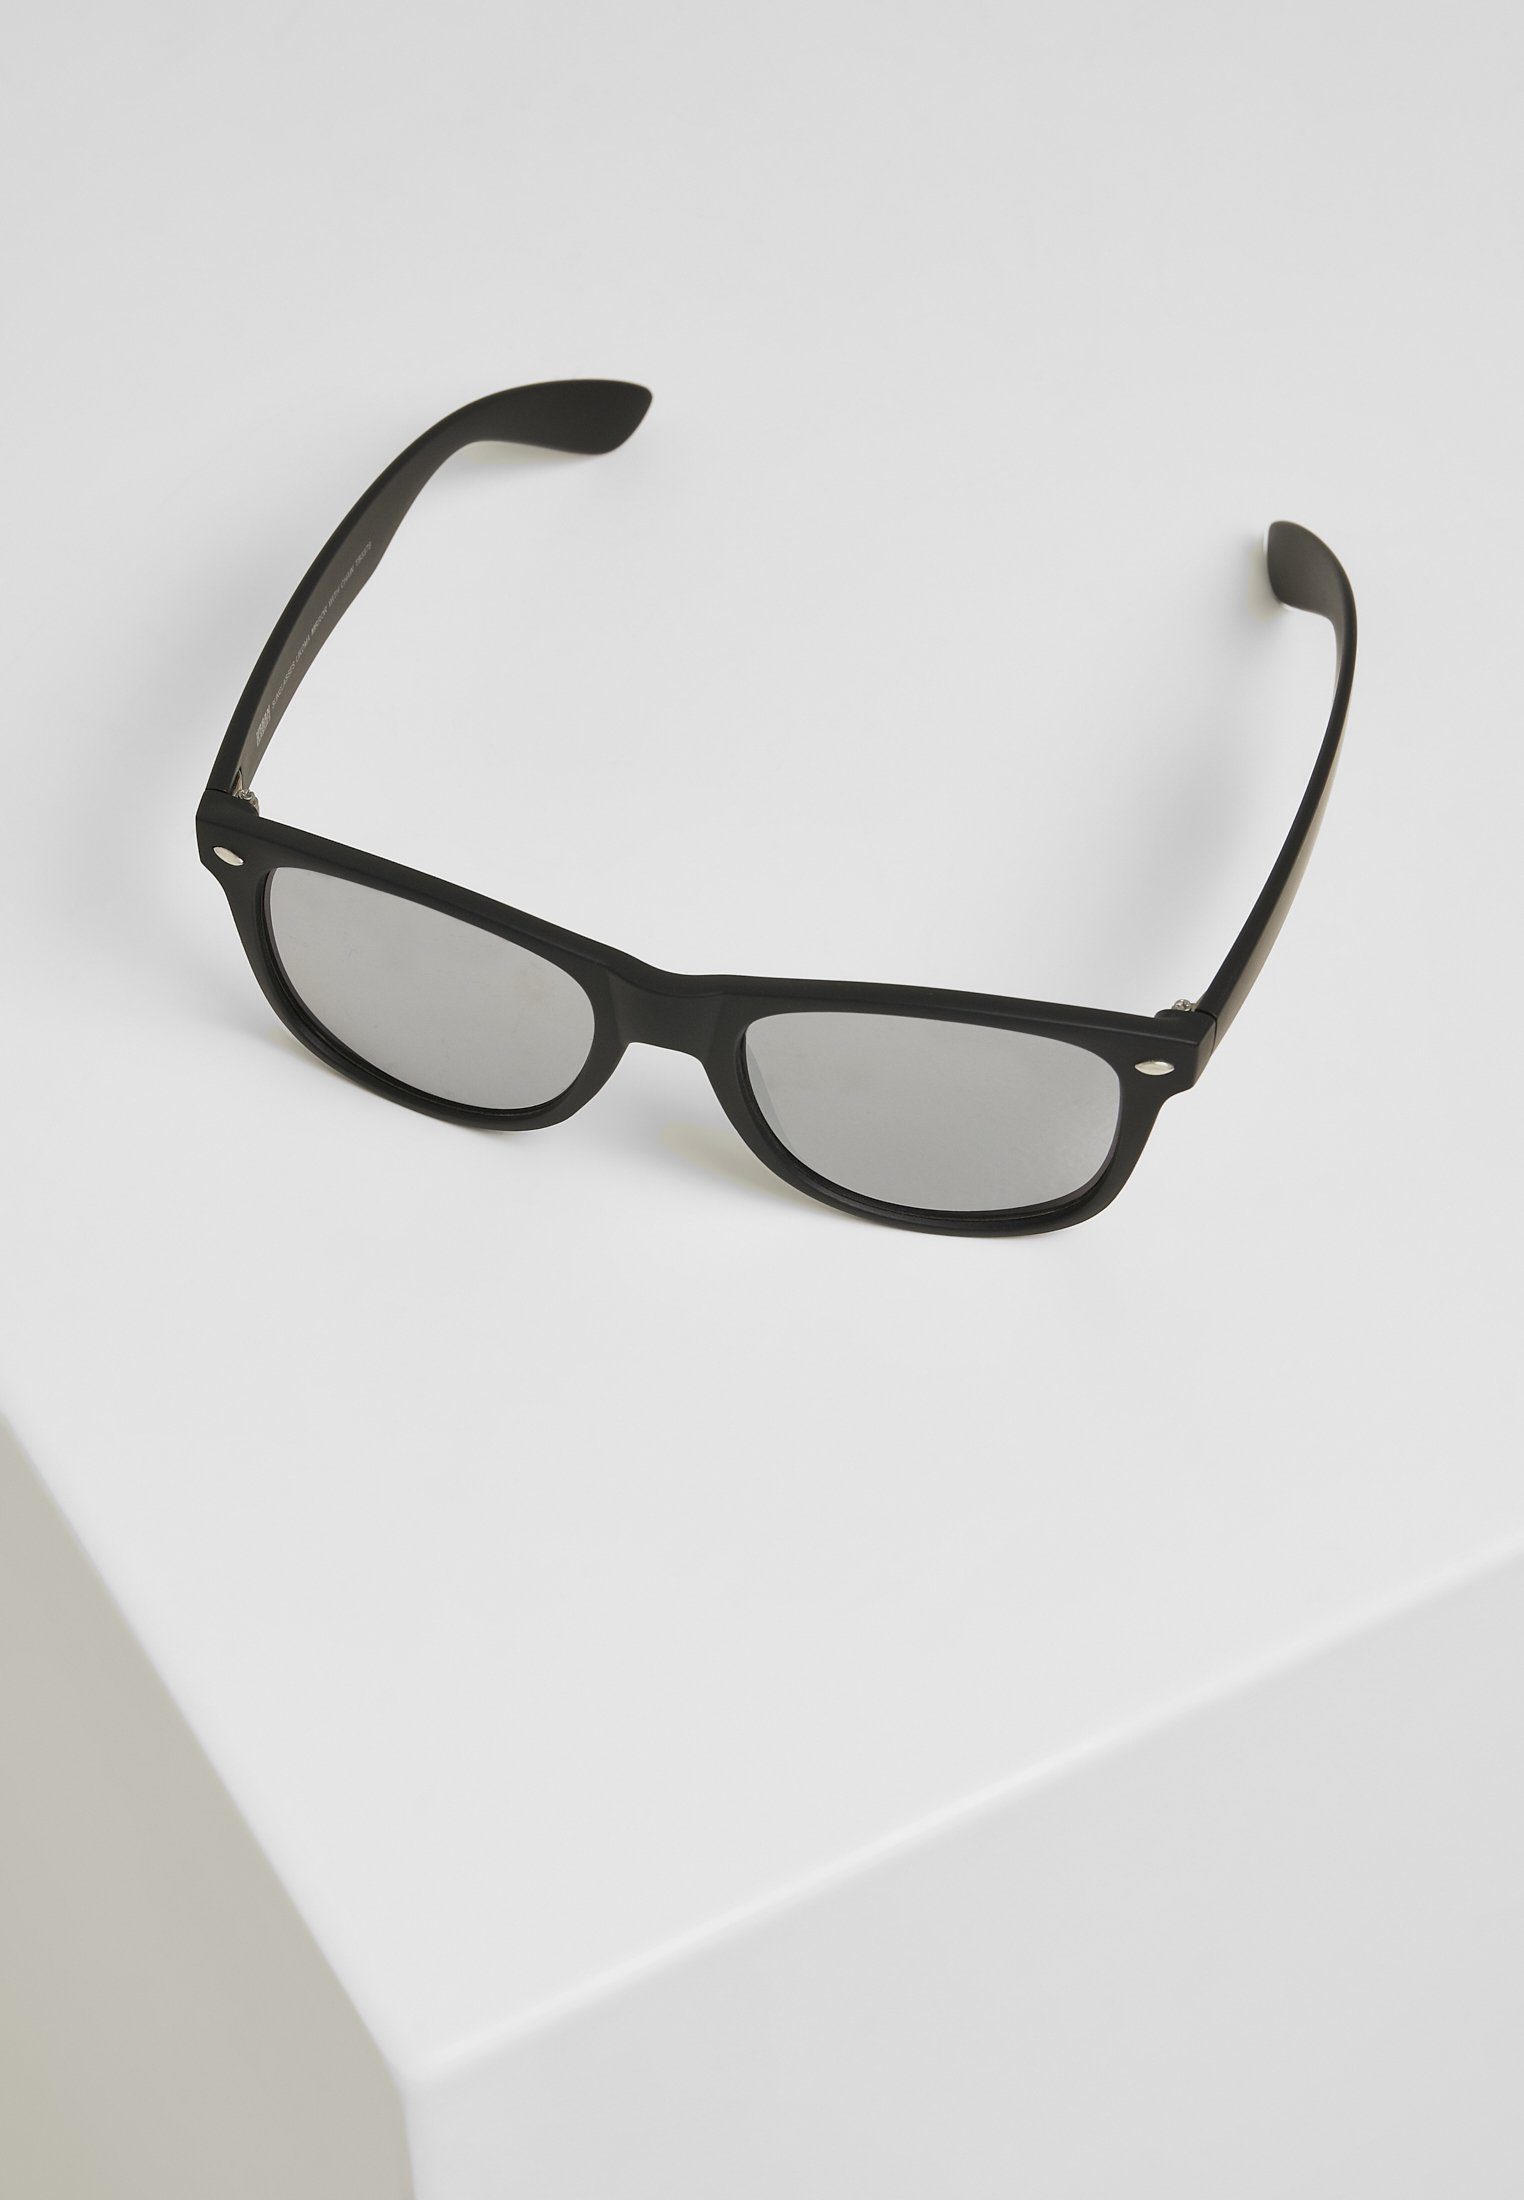 Likoma Mirror Sonnenbrille CLASSICS With Chain URBAN Sunglasses Unisex